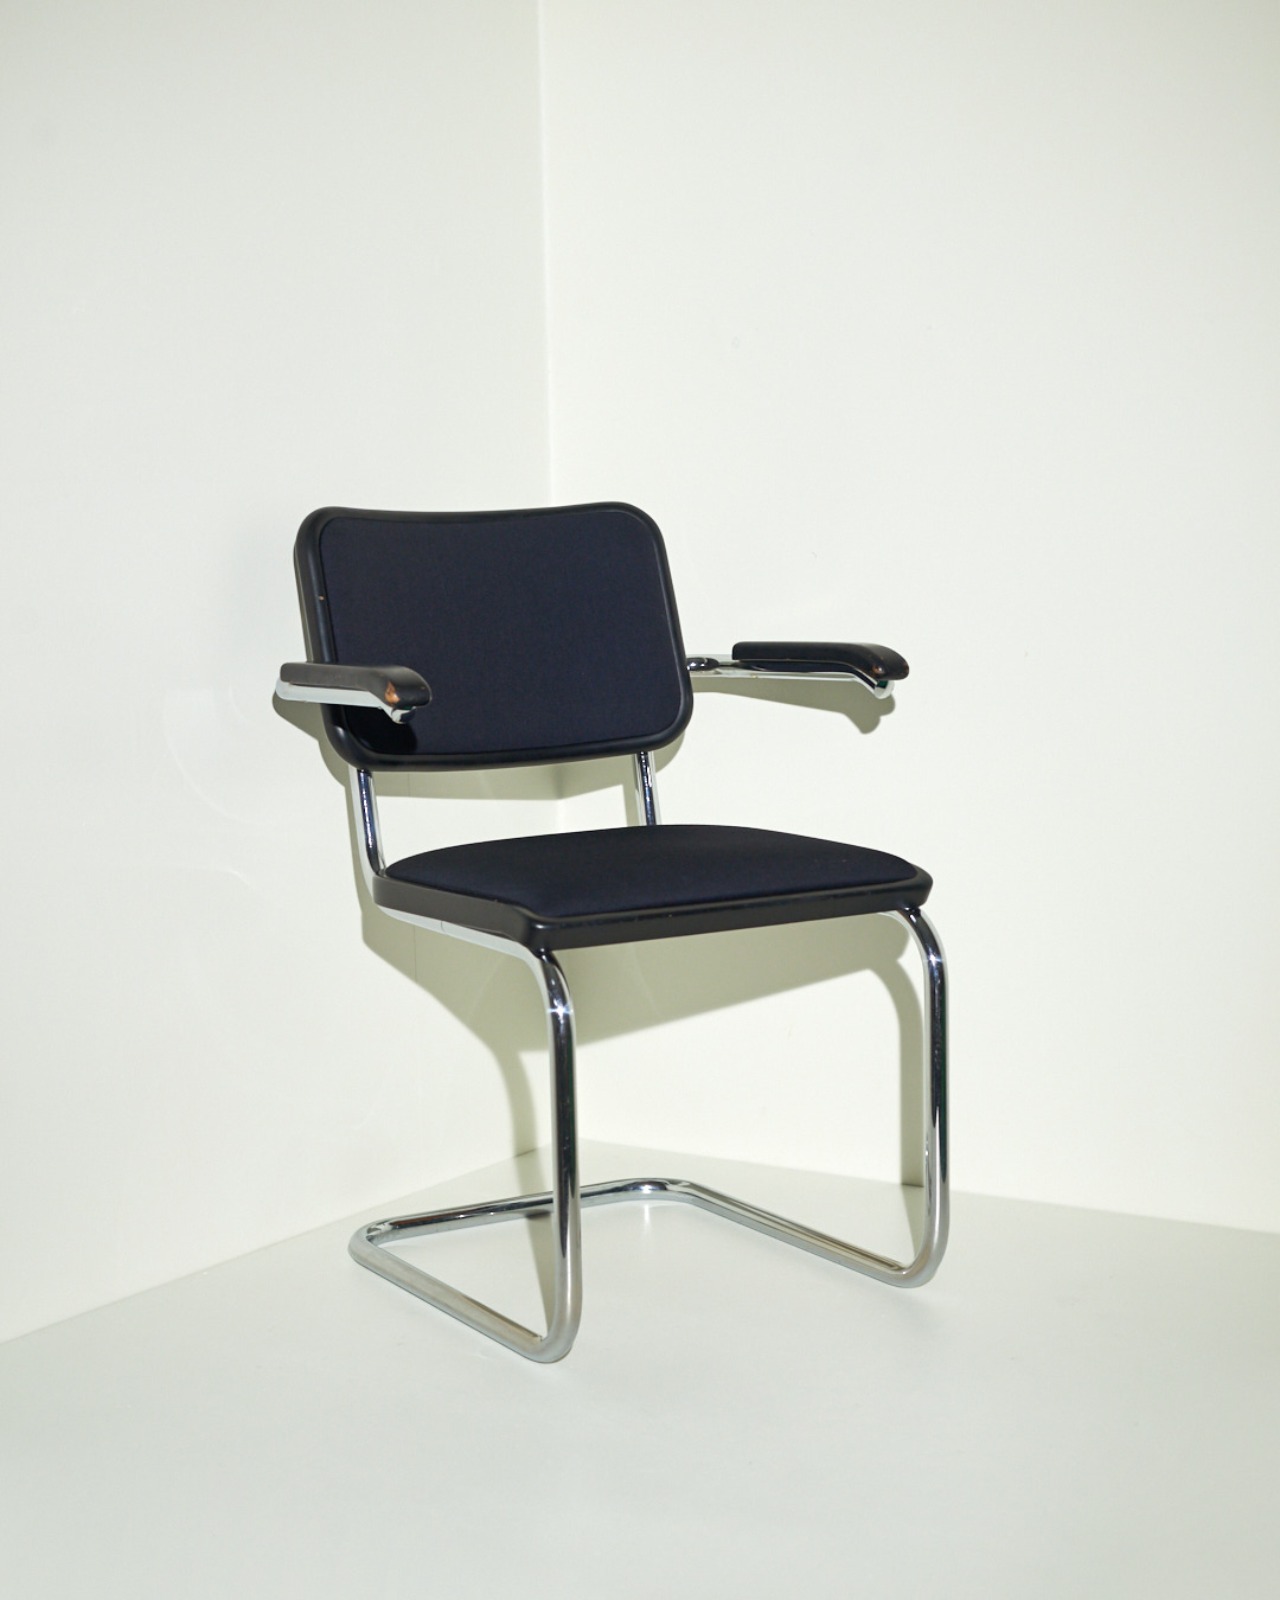 #8284 / Thonet S64 Chair By Marcel Brueuer